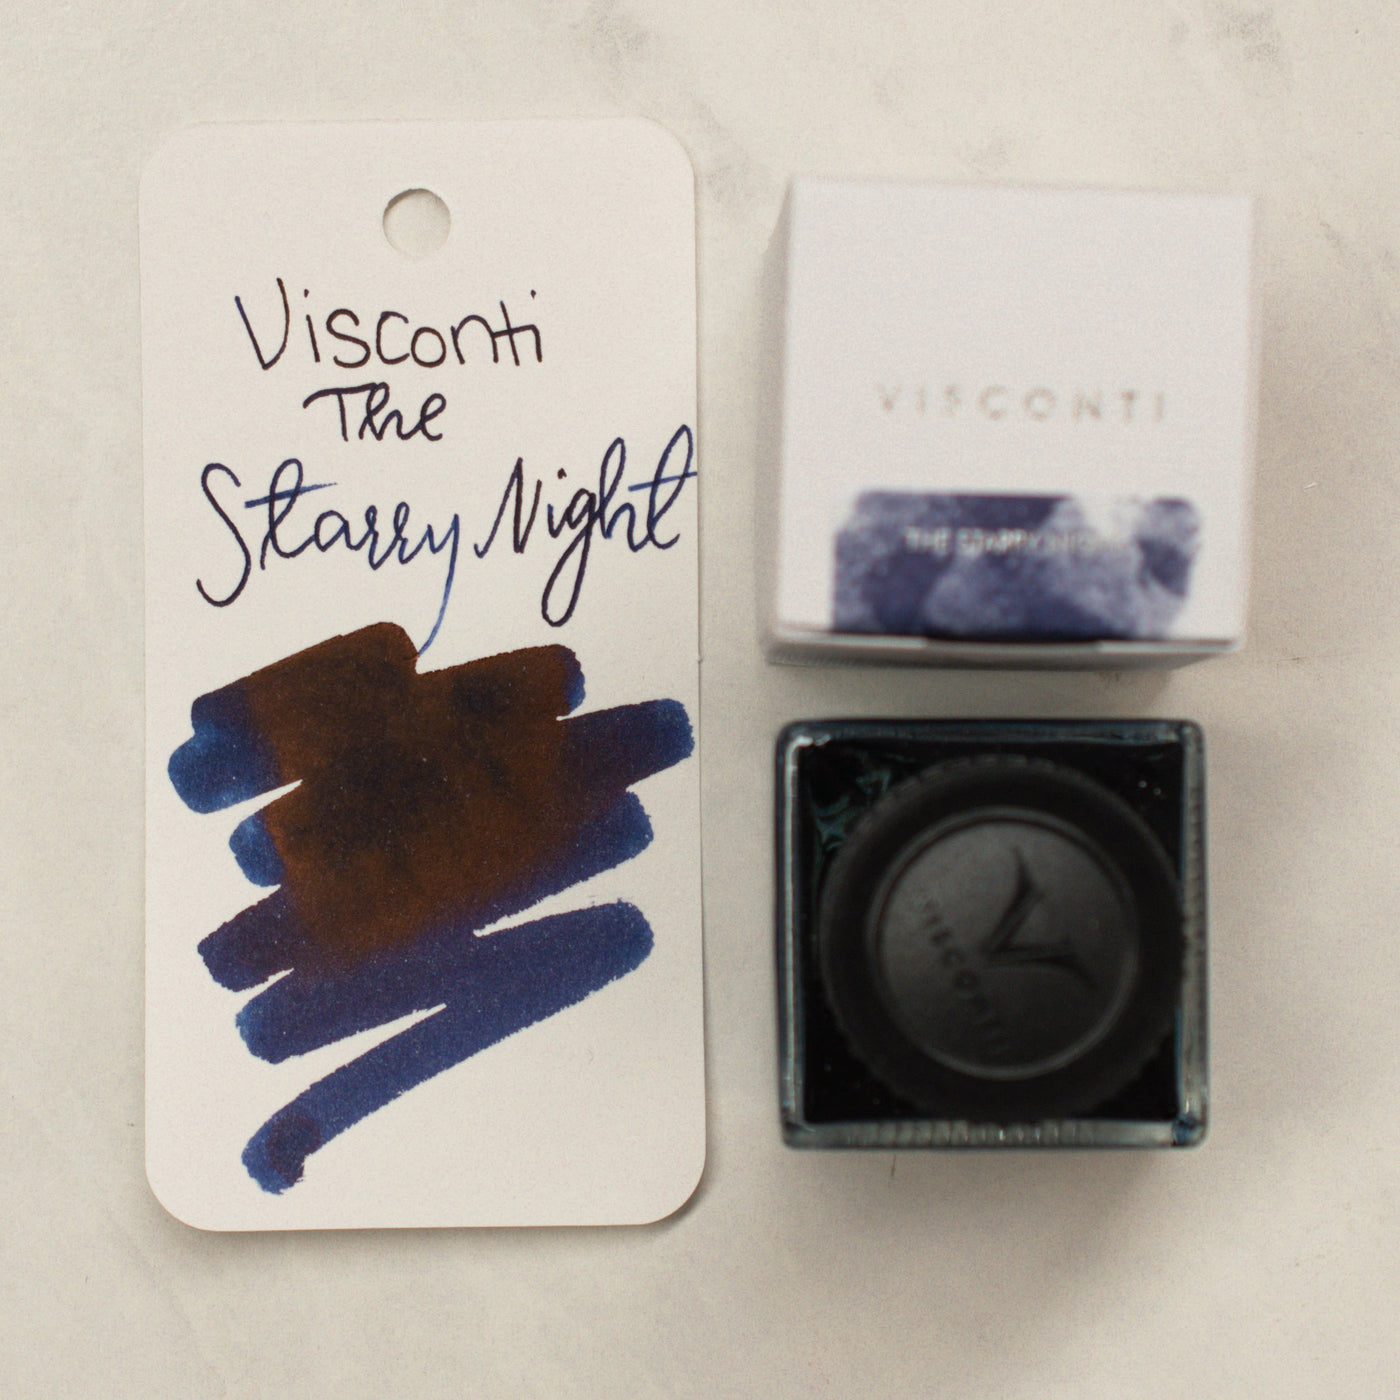 Visconti-Van-Gogh-Starry-Night-Ink-Bottle-30ml-Blue